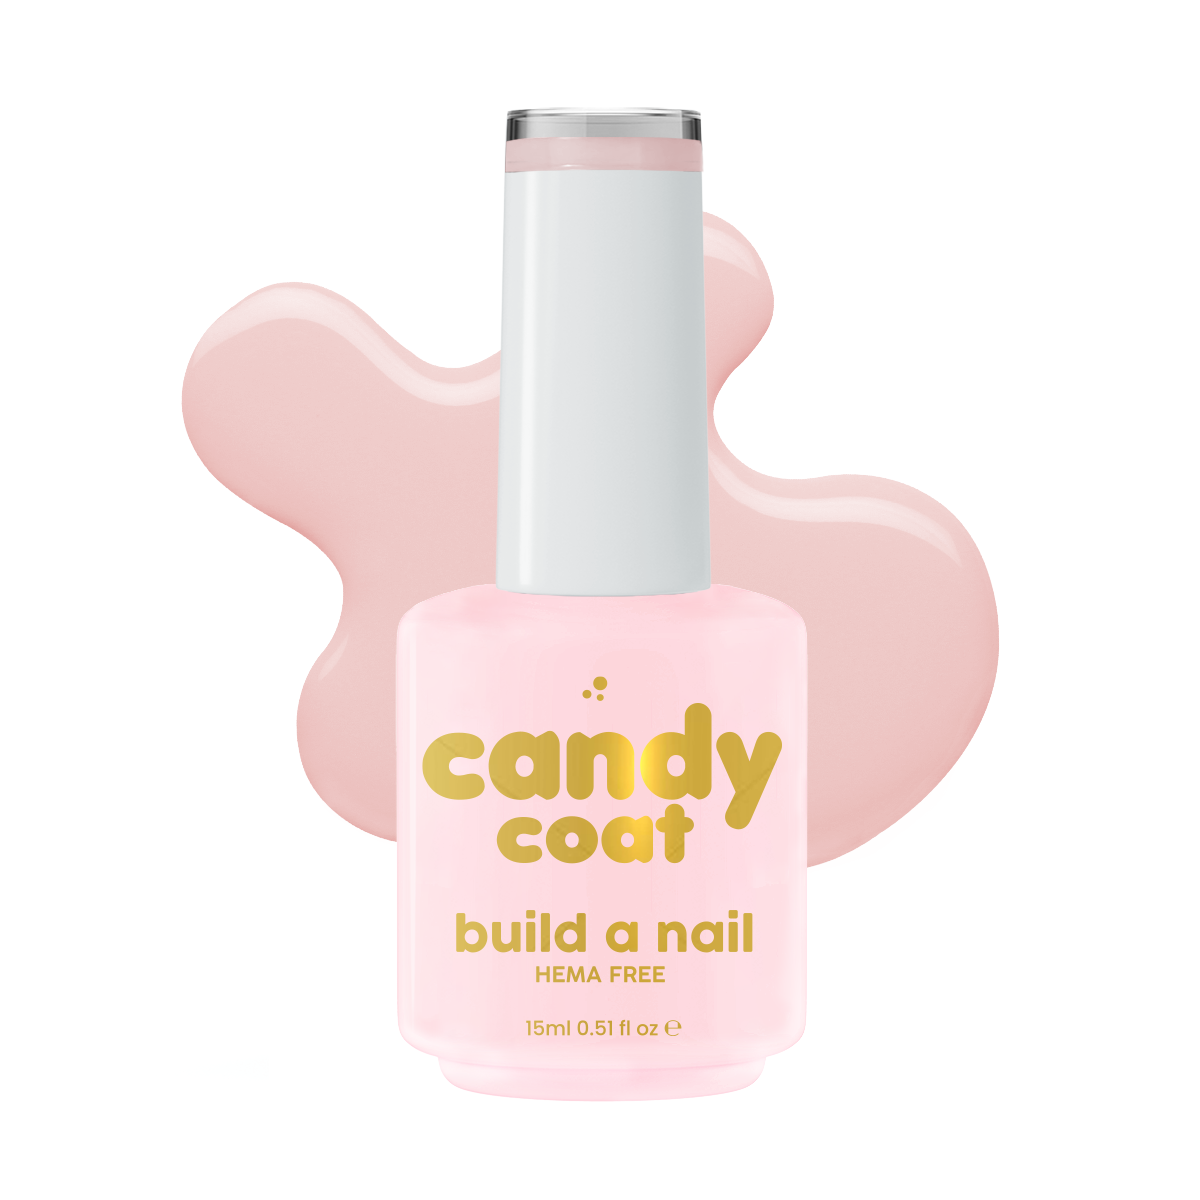 Candy Coat - HEMA Free Build-a-Nail® - BH013 15ml - Candy Coat